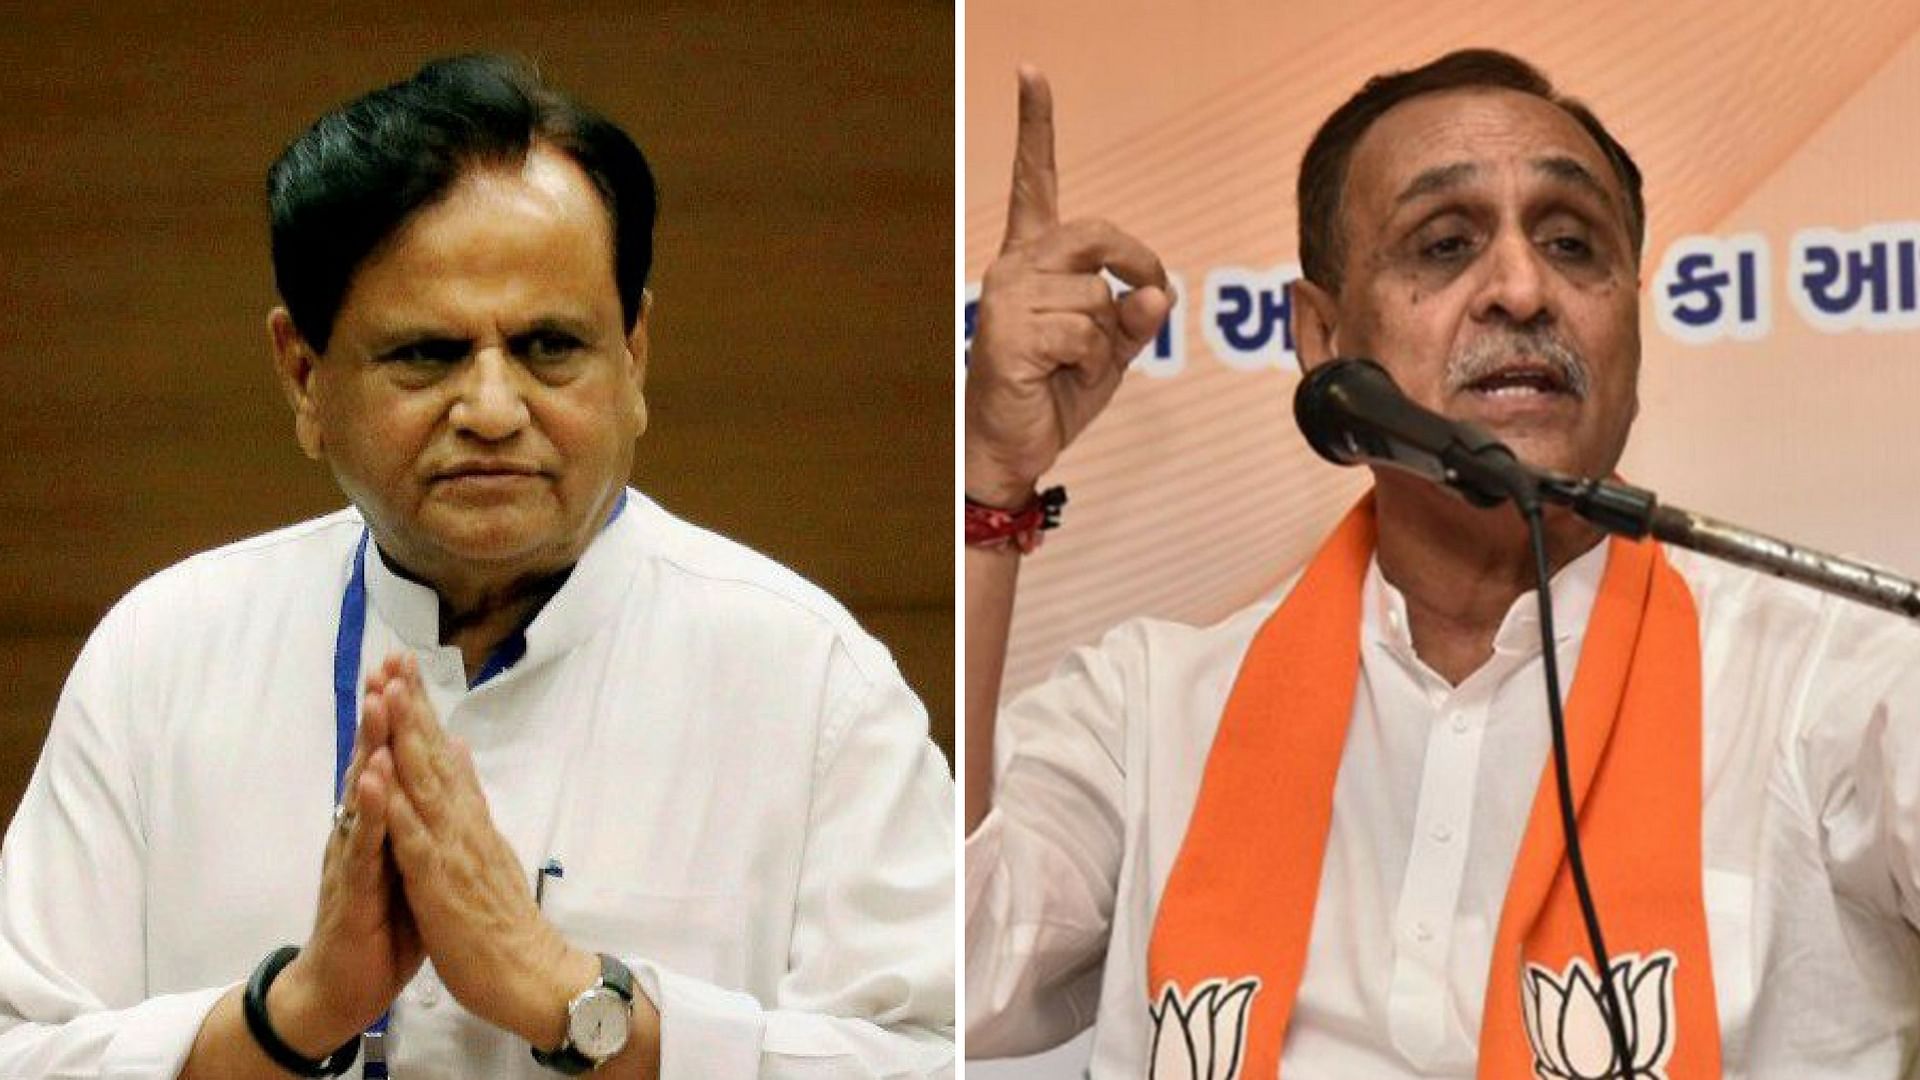 Congress leader Ahmad Patel (left) and Gujarat Chief Minister Vijay Rupani.